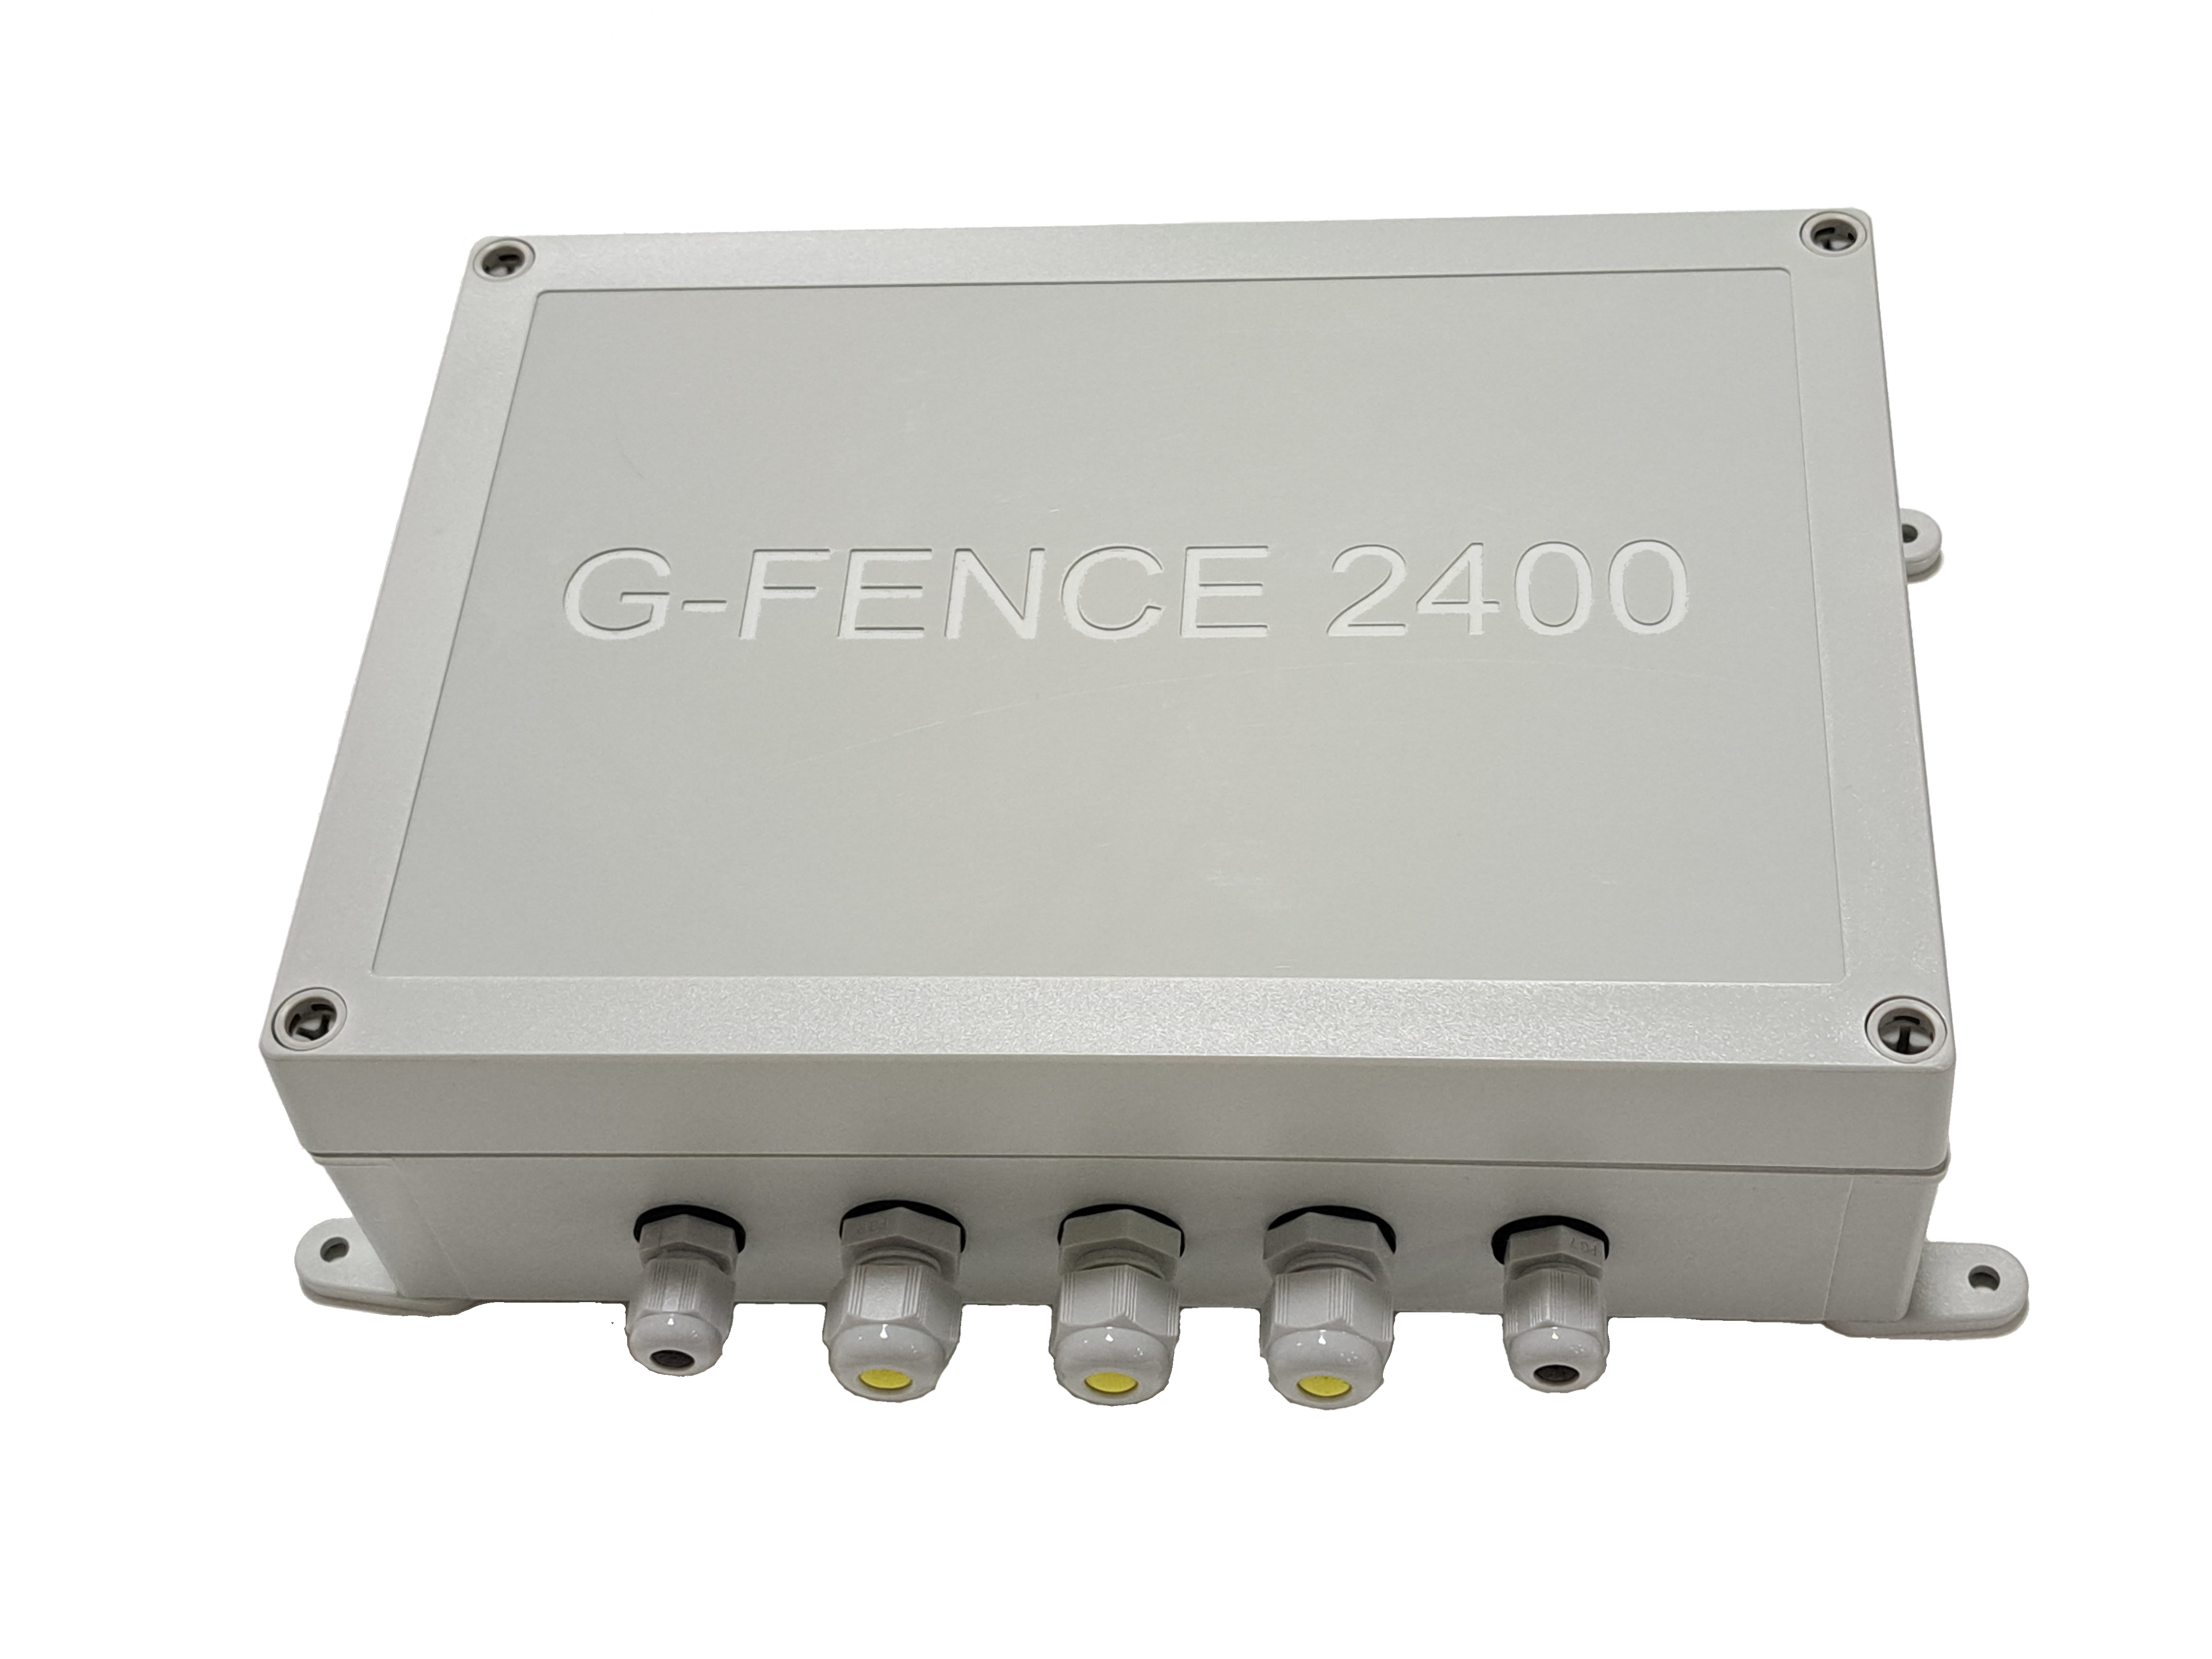 G-FENCE 2400-IP65 LIGHTEN WORDINGa